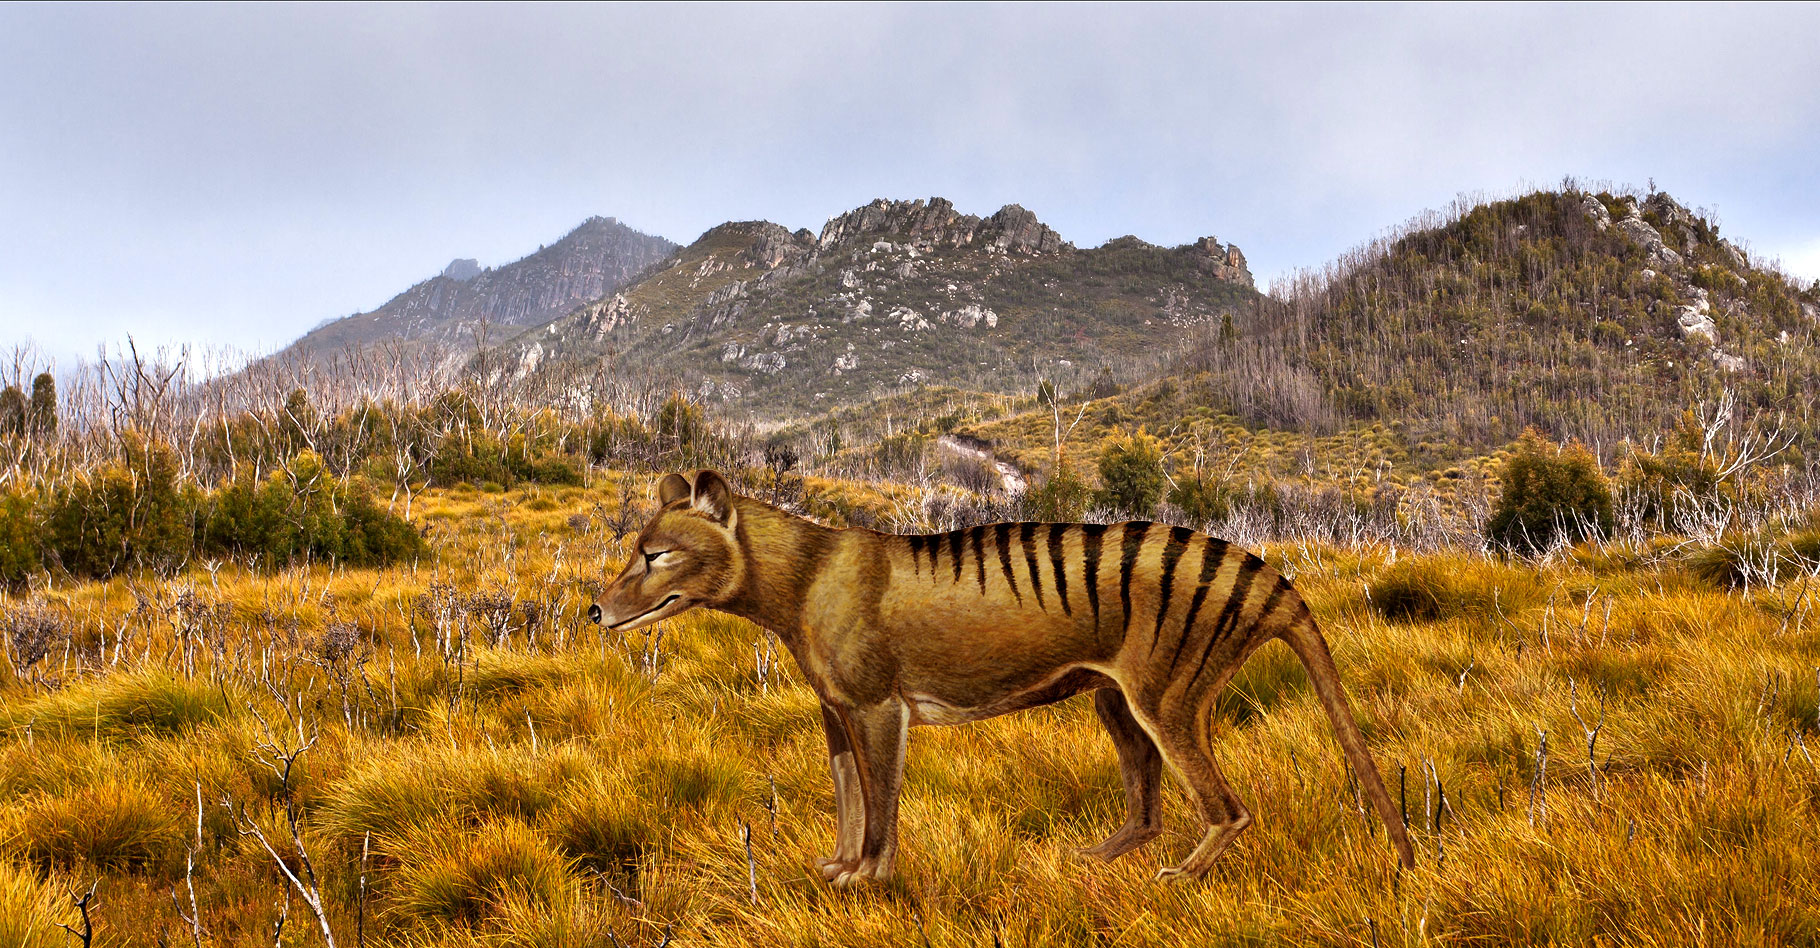 Le tigre de Tasmanie. © Bill Higham CC BY-NC 2.0 - FS domaine public